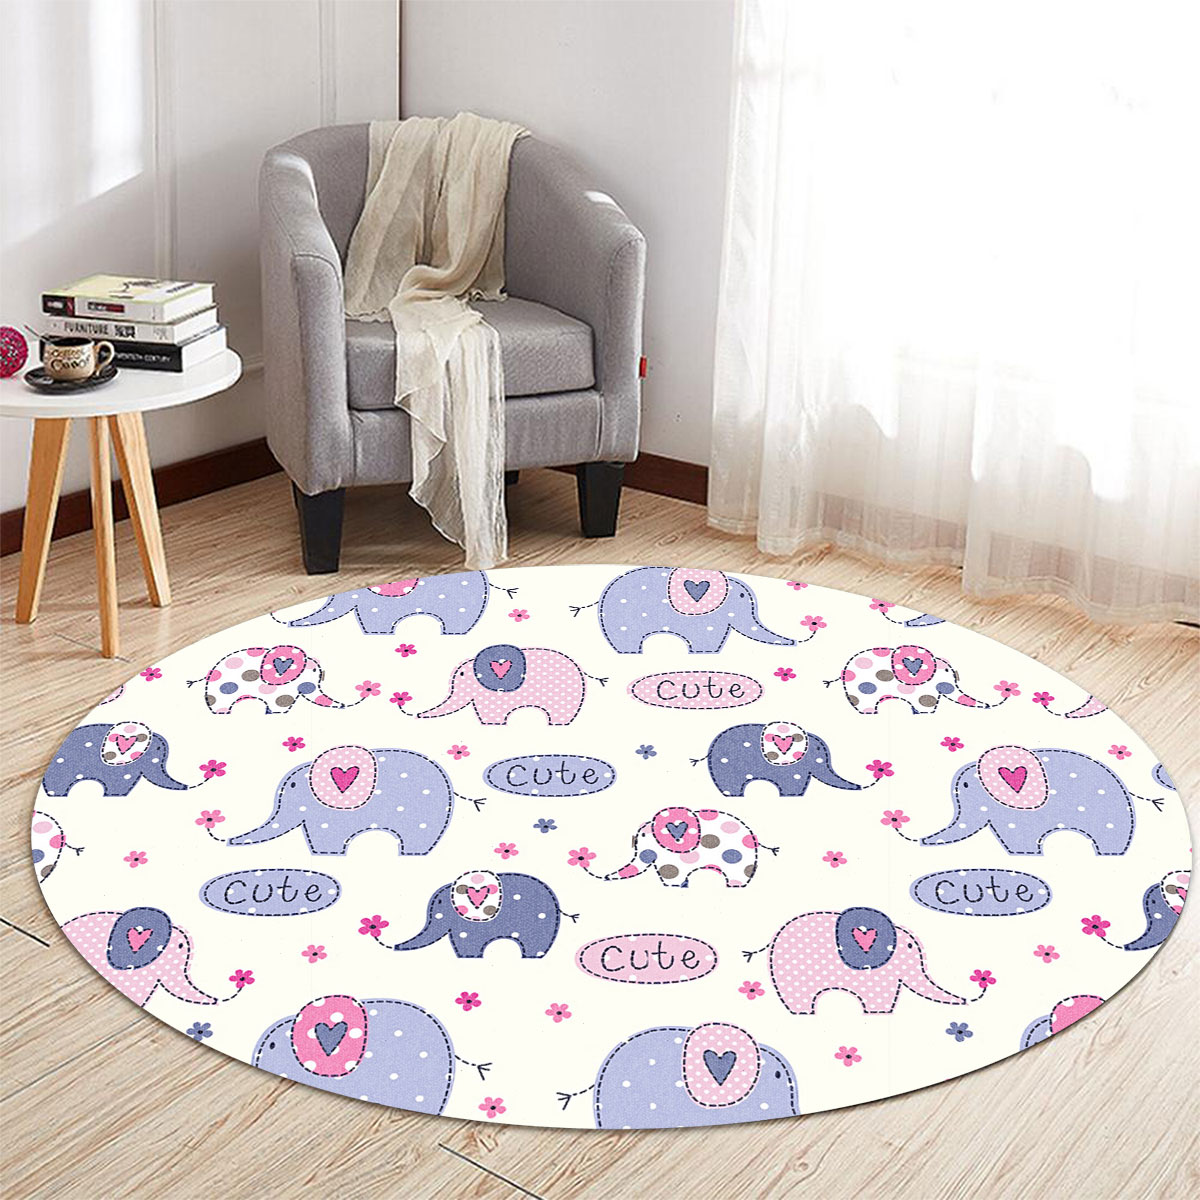 Cute Purple Asian Elephant Round Carpet 6